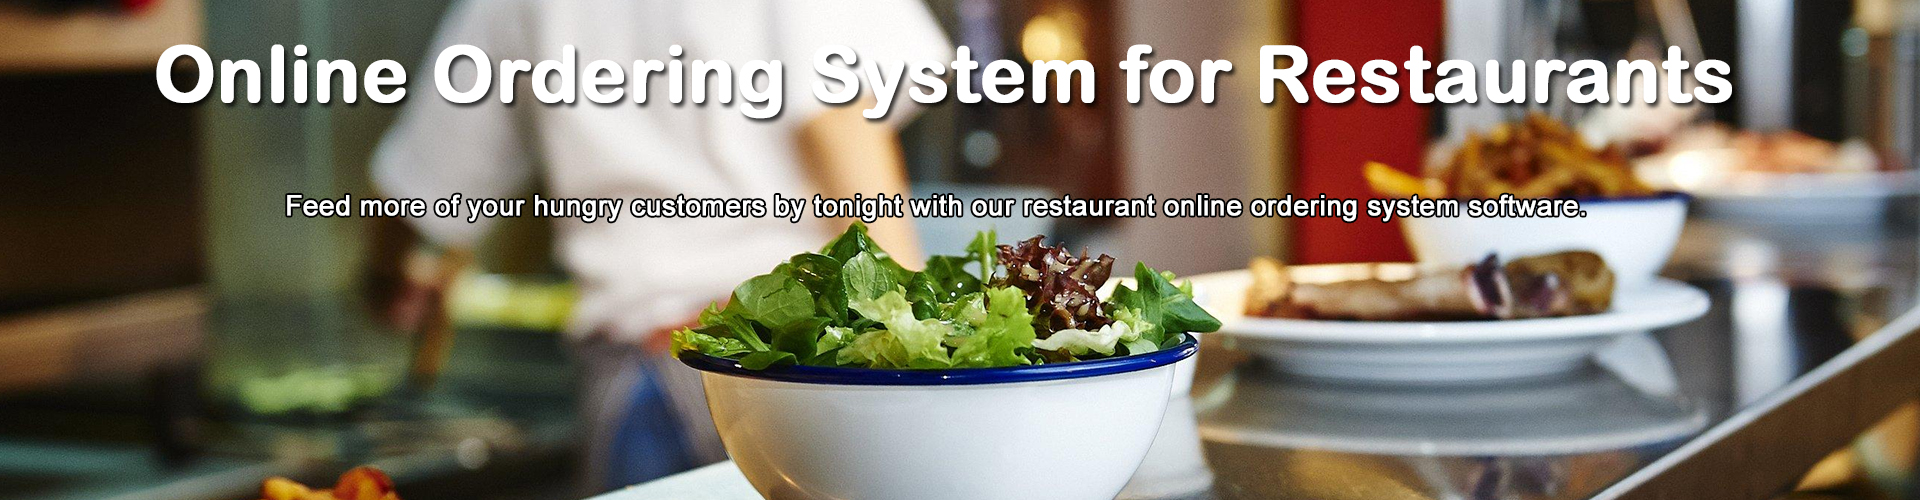 Online Restaurant Ordering System